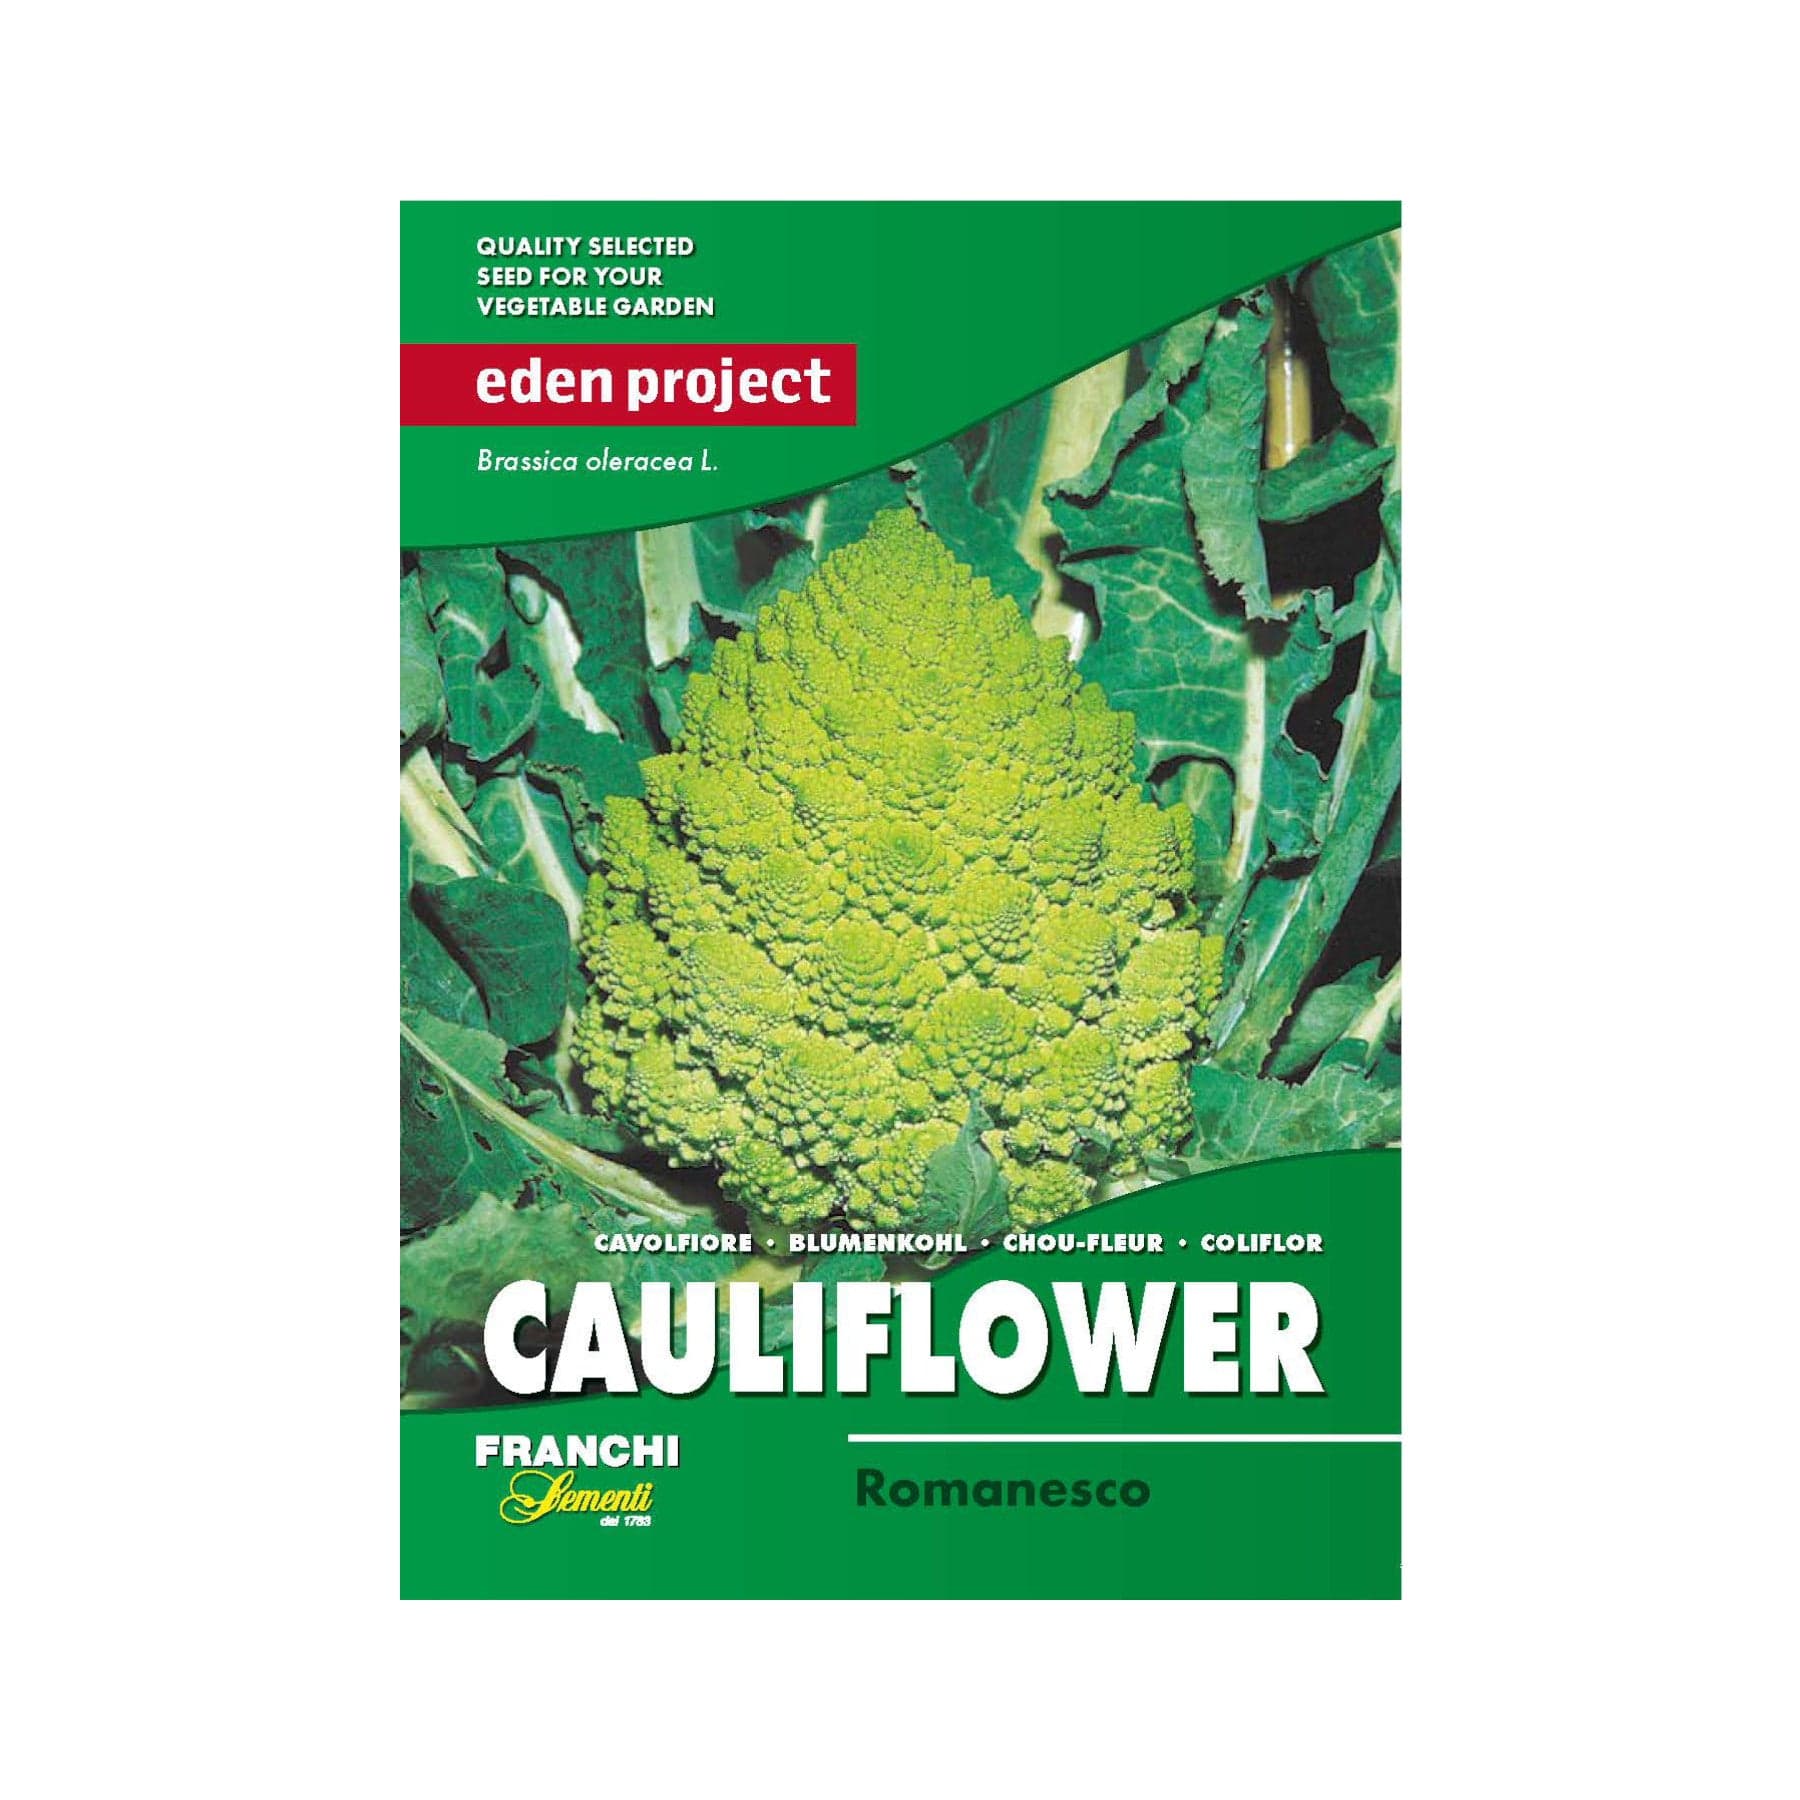 Cauliflower romanesco seeds